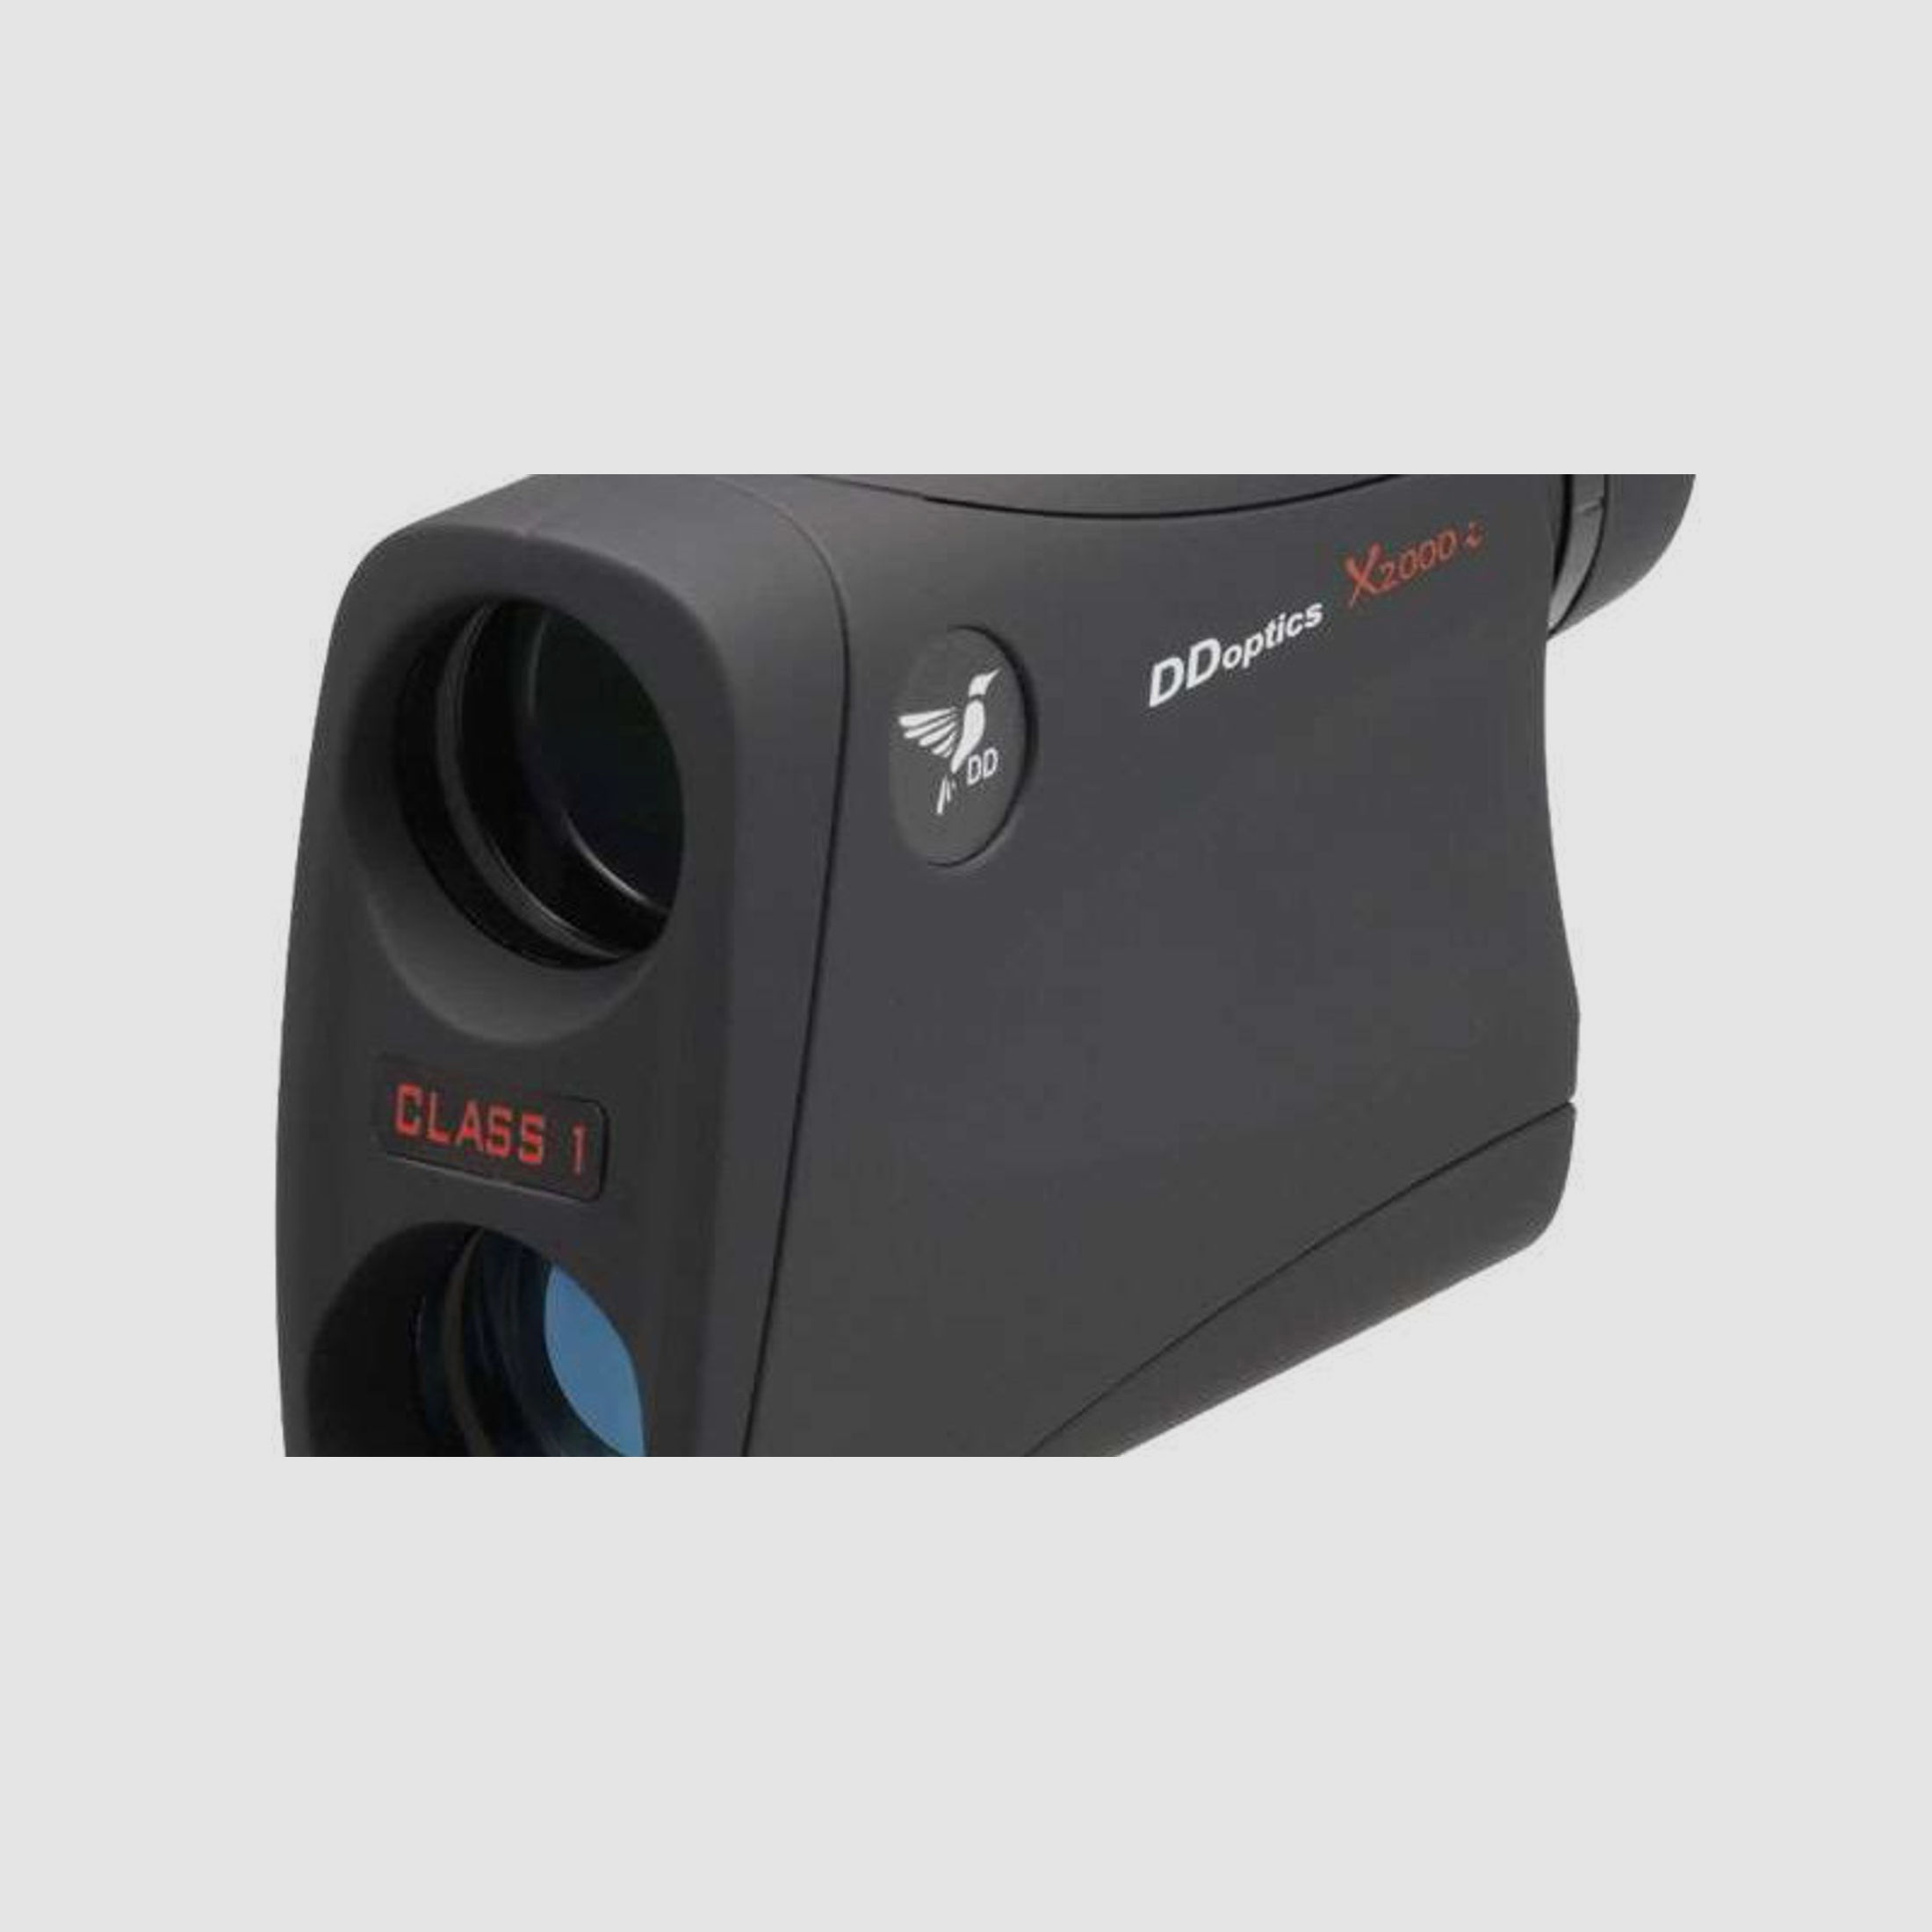 DDoptics | Laser-Entfernungsmesser x2000i